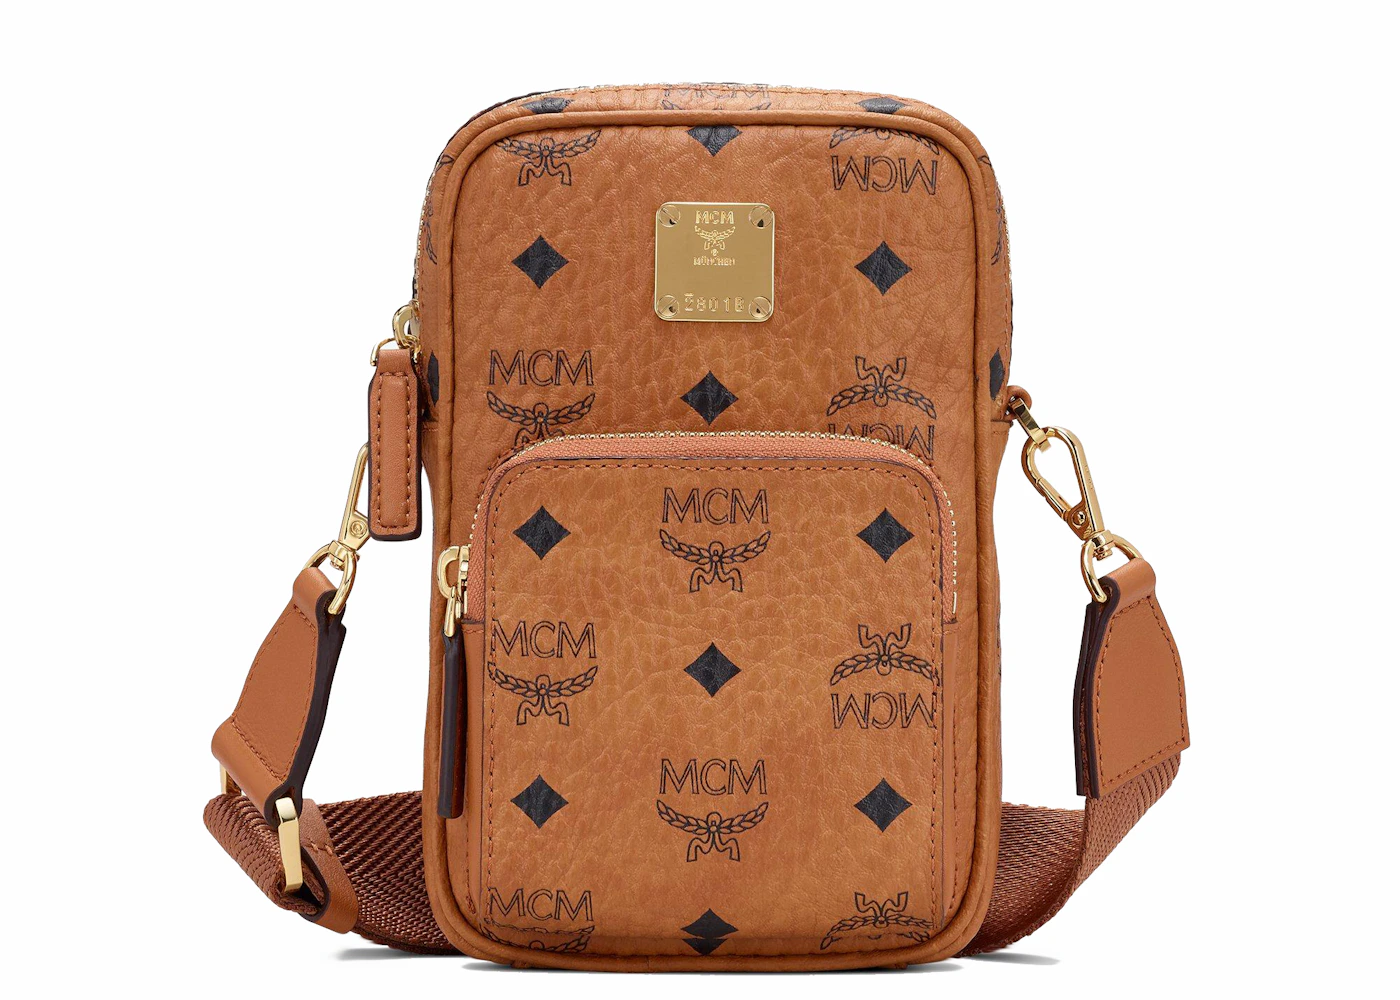 mcm crossbody bag price